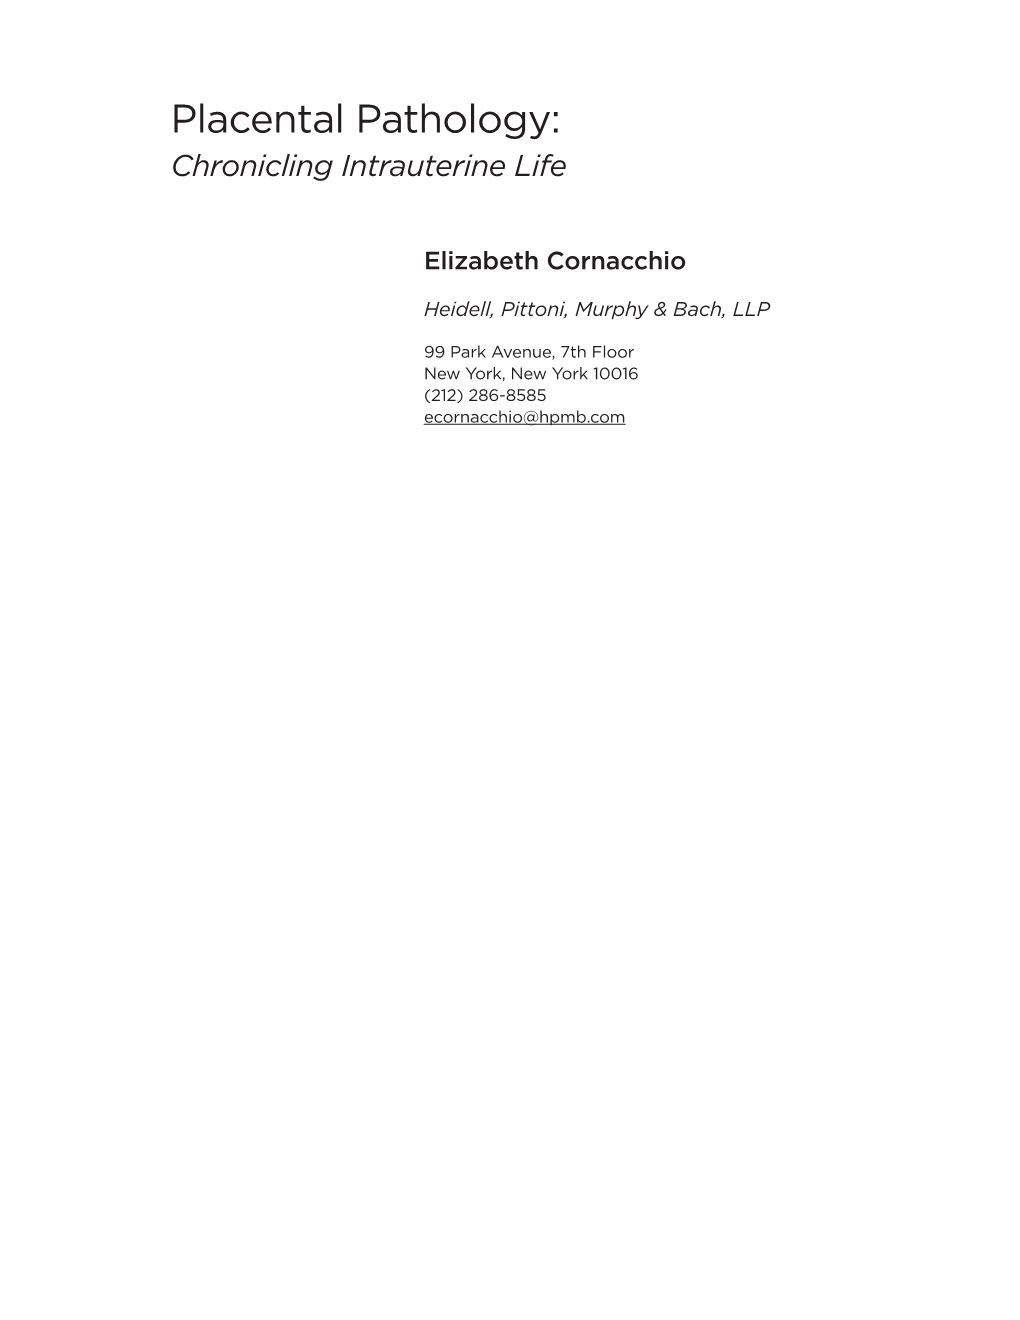 Placental Pathology: Chronicling Intrauterine Life